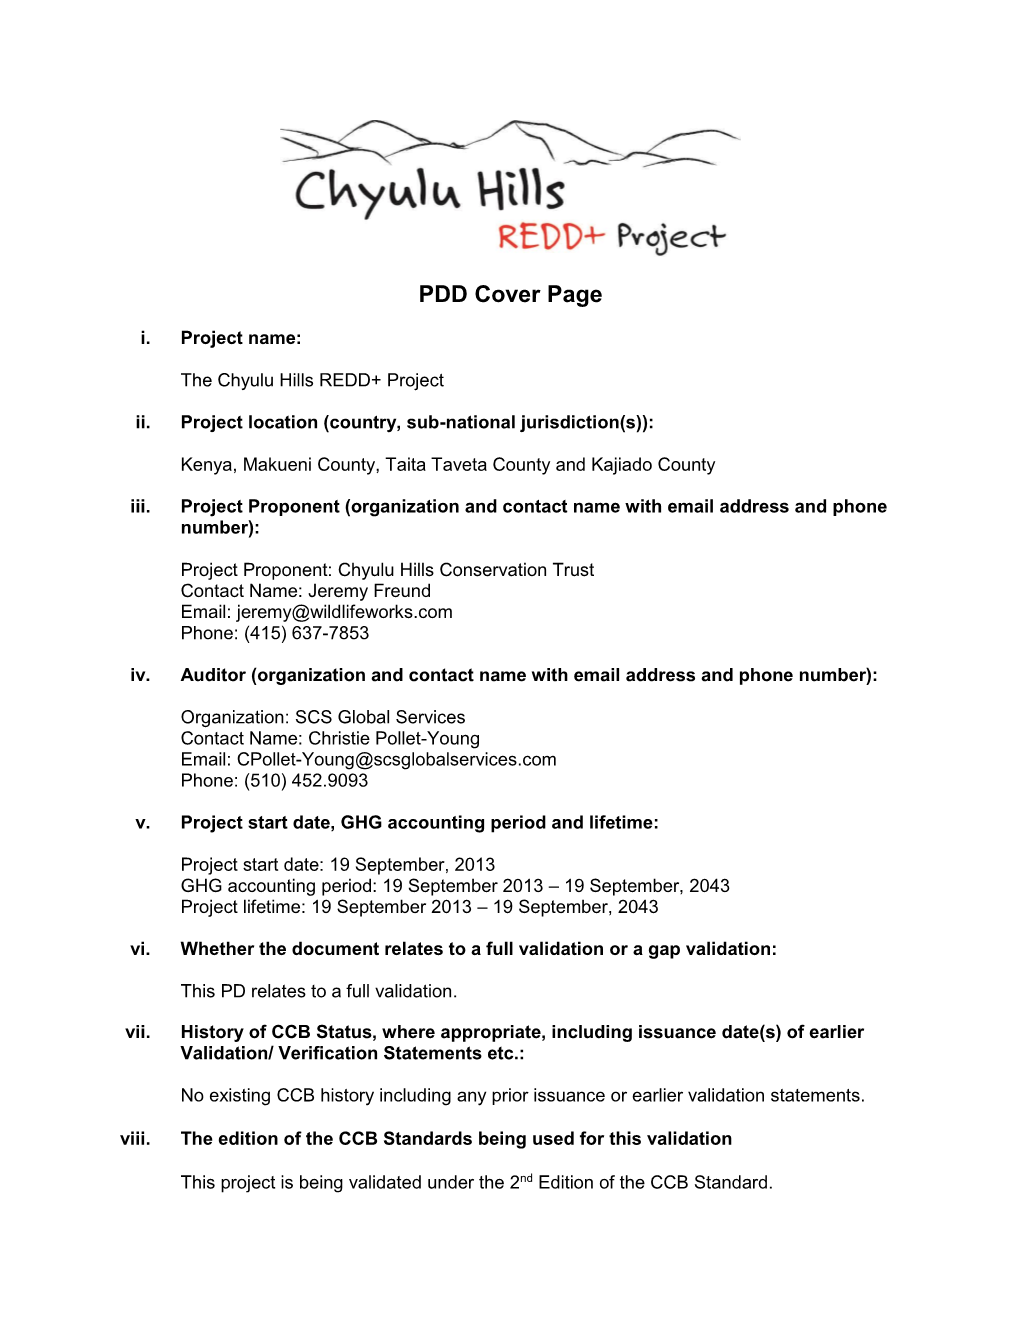 Chyulu Hills Project Description